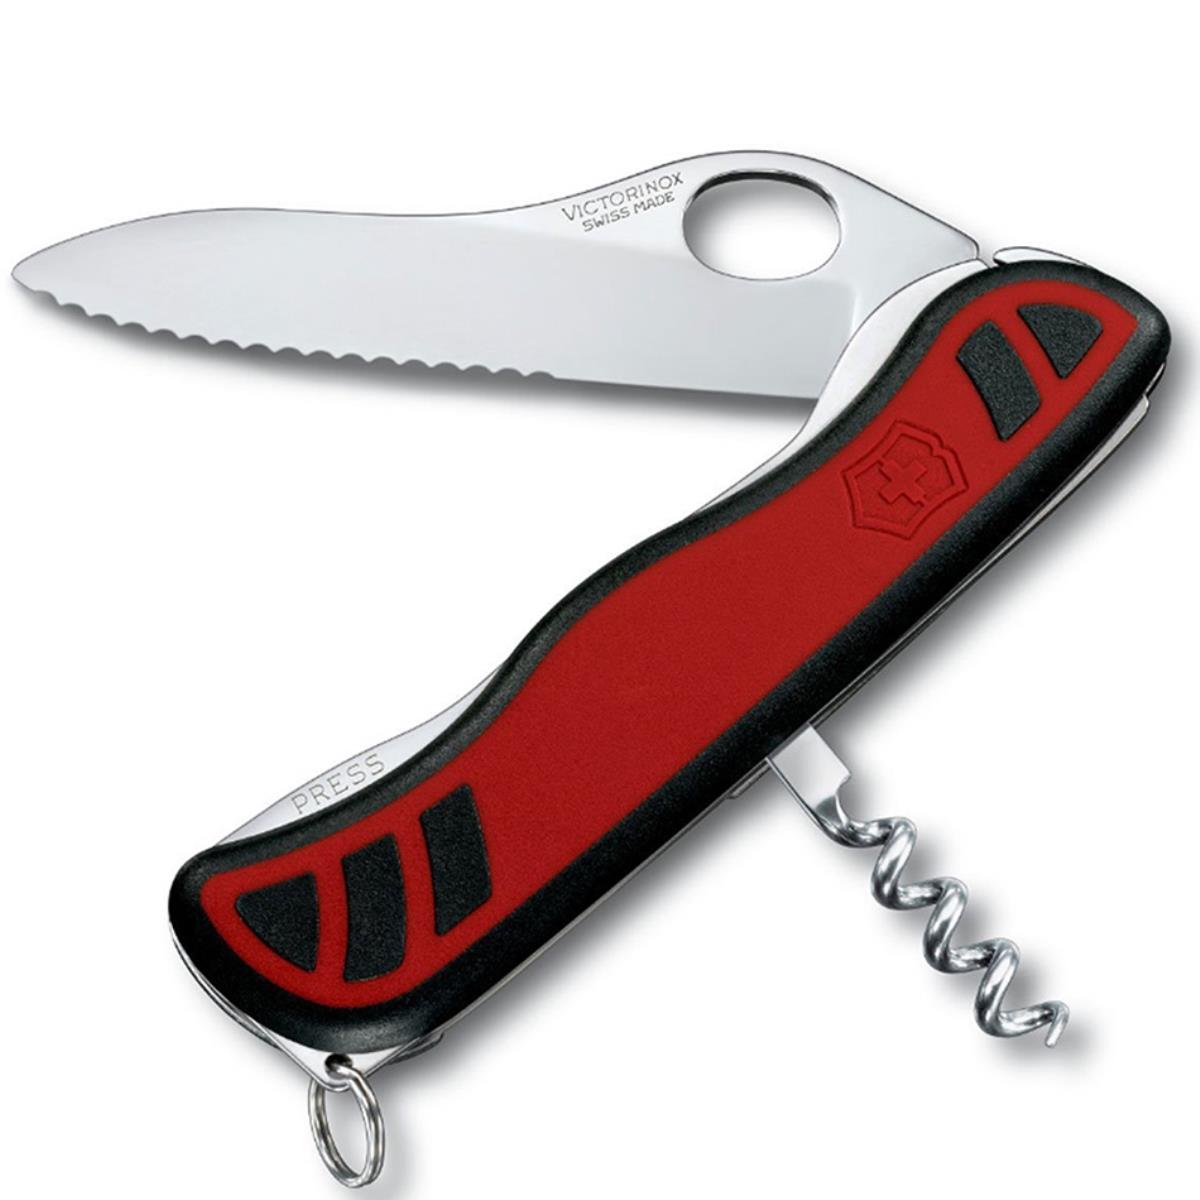 Нож 0.8321. MWC VICTORINOX нож перочинный victorinox sentinel one hand 111 мм с фиксатором лезвия 5 функций